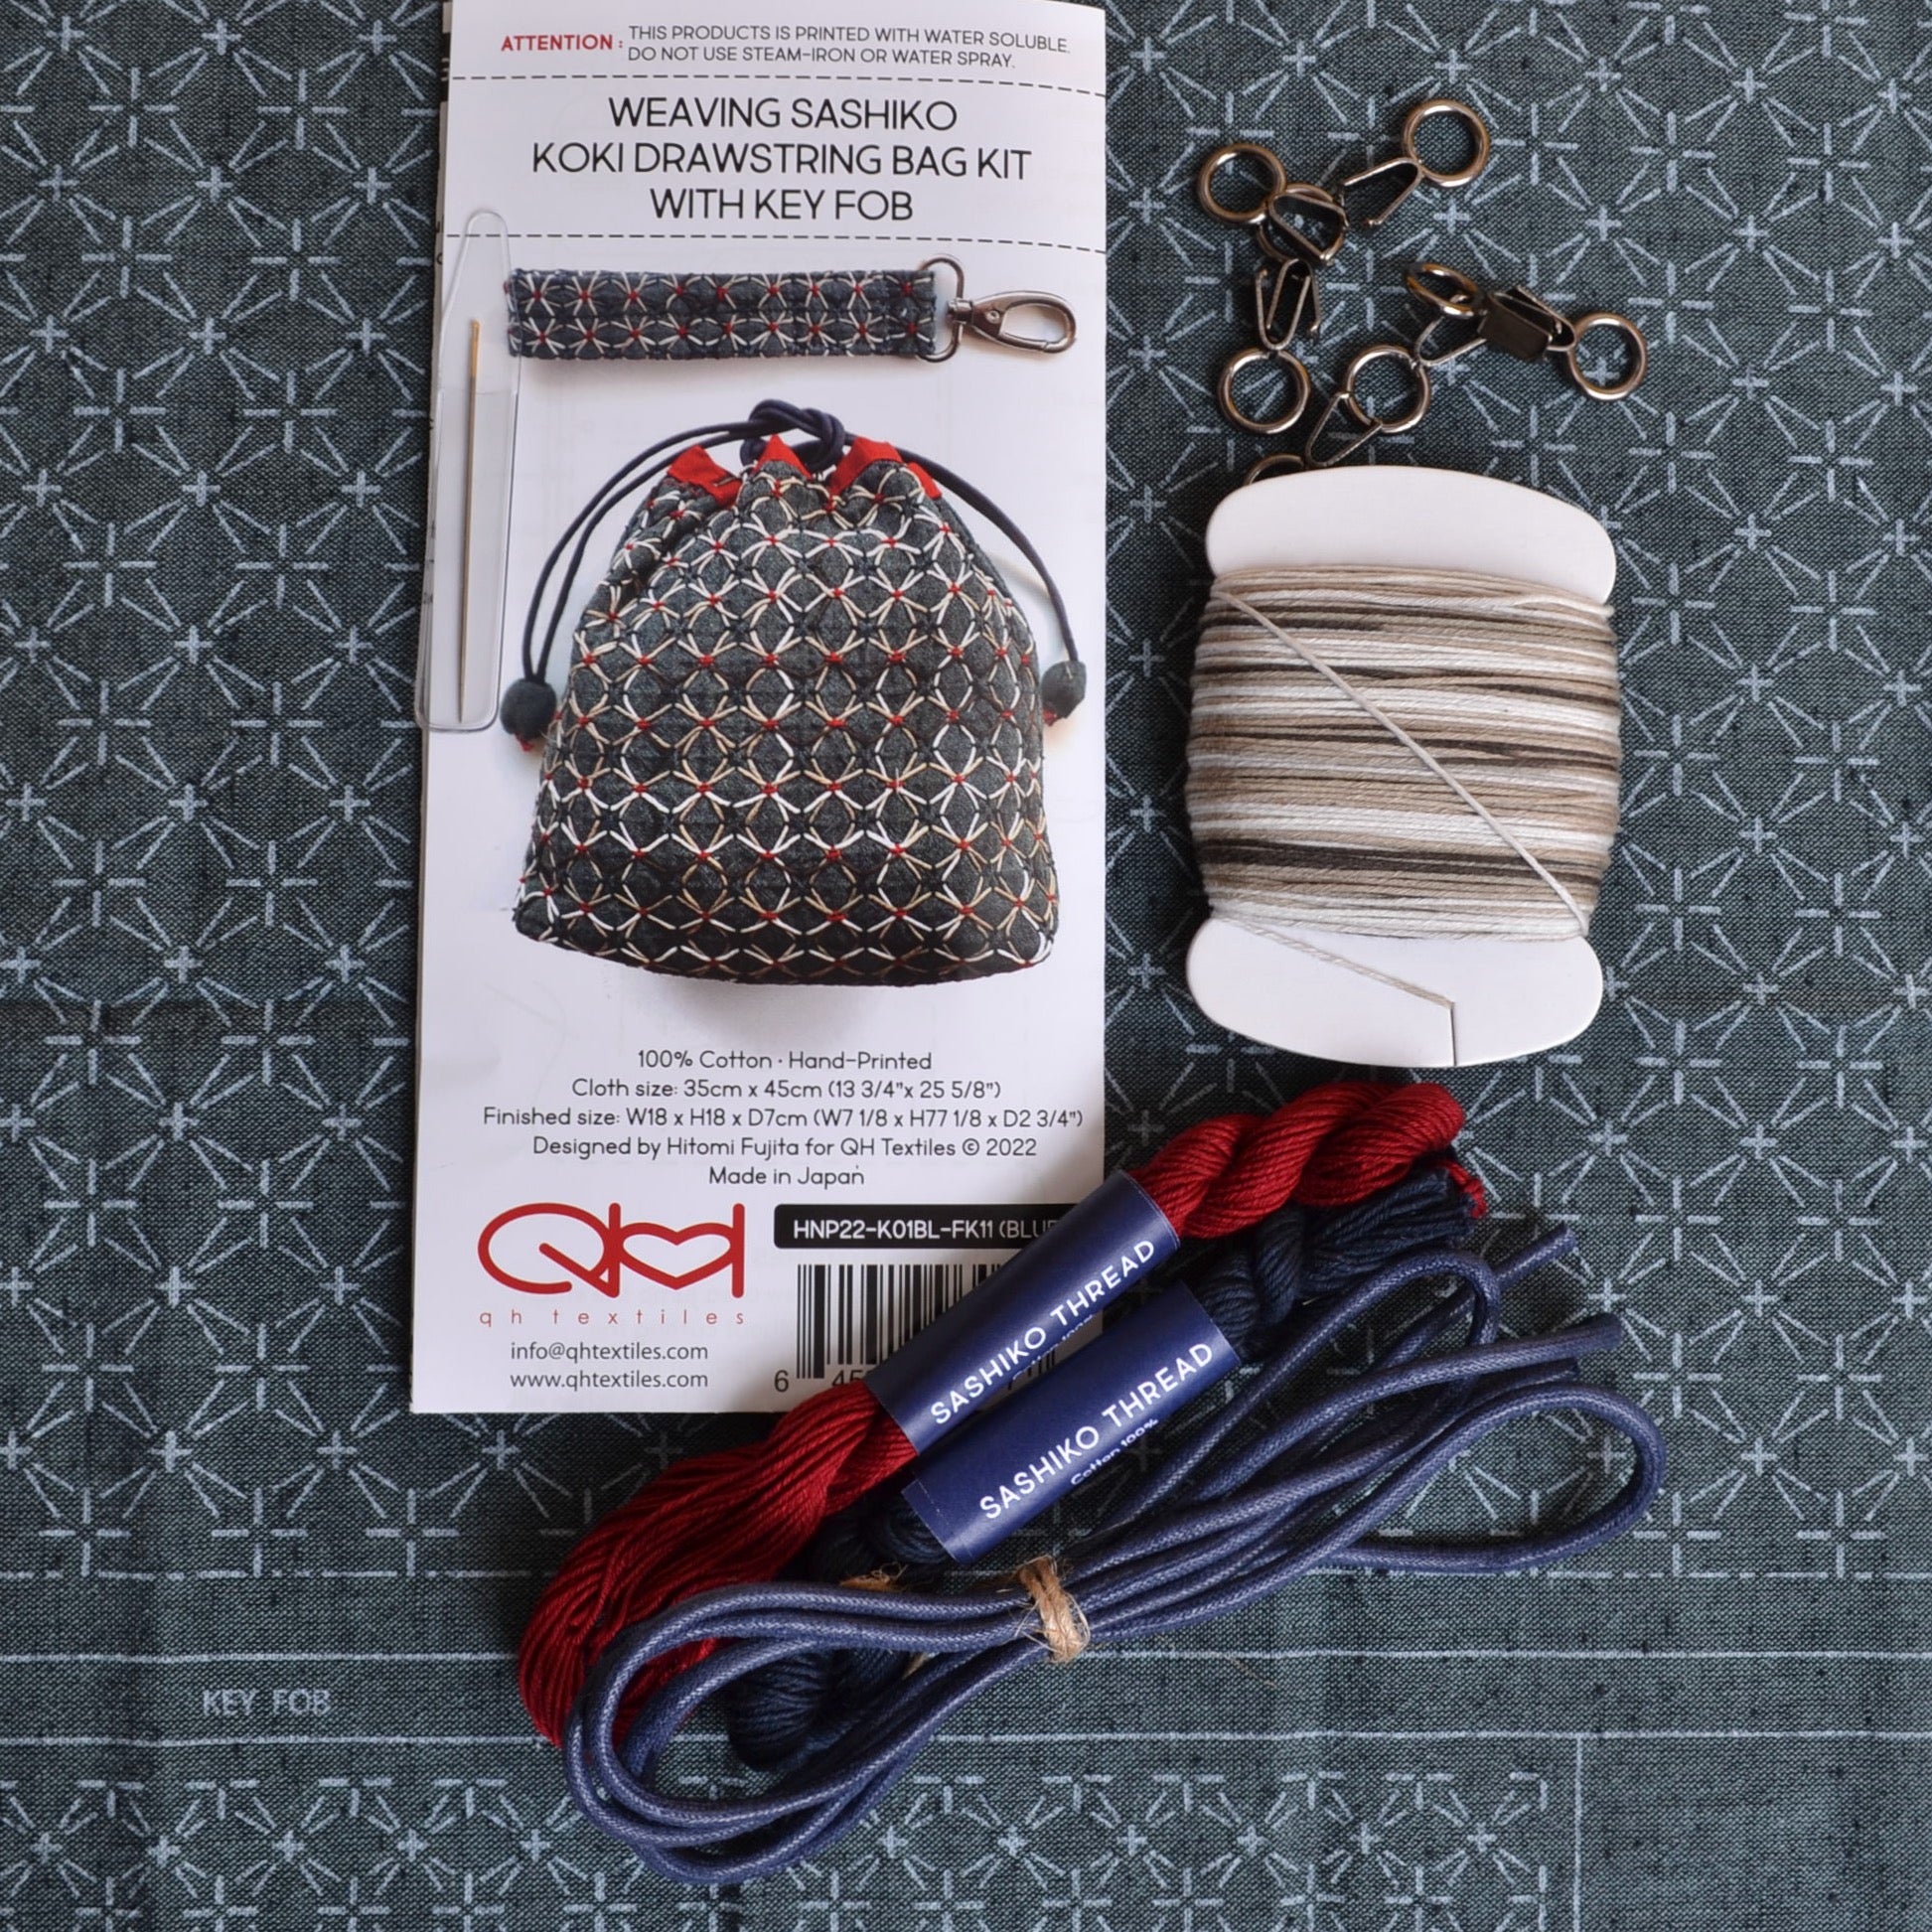 sashiko drawstring bag with koki hardware, threads & cord kit